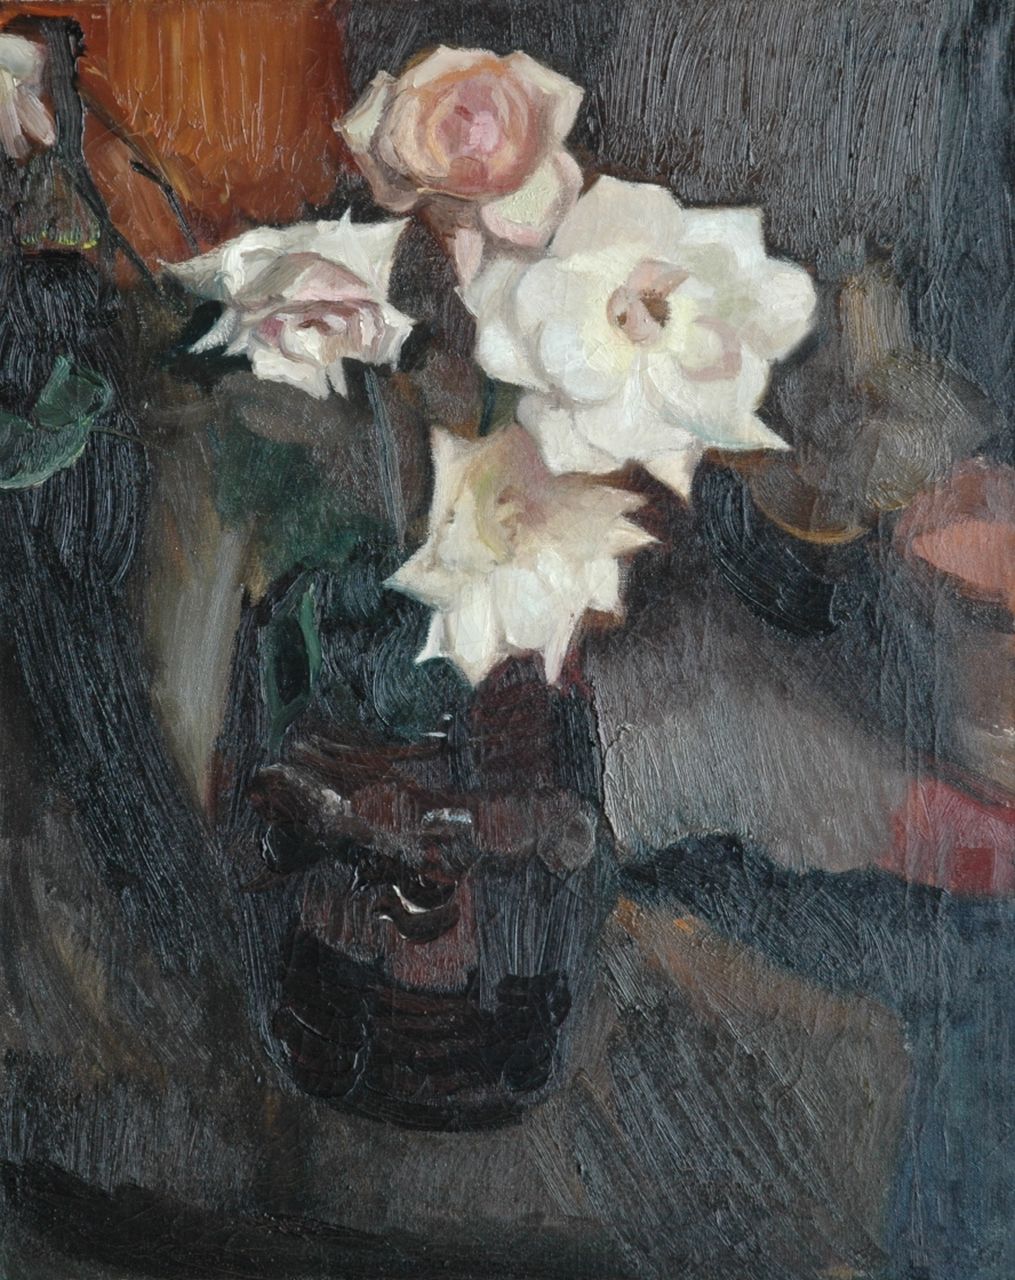 Wijngaerdt P.T. van | Petrus Theodorus 'Piet' van Wijngaerdt | Paintings offered for sale | Roses, oil on canvas 76.0 x 60.5 cm, signed u.r.